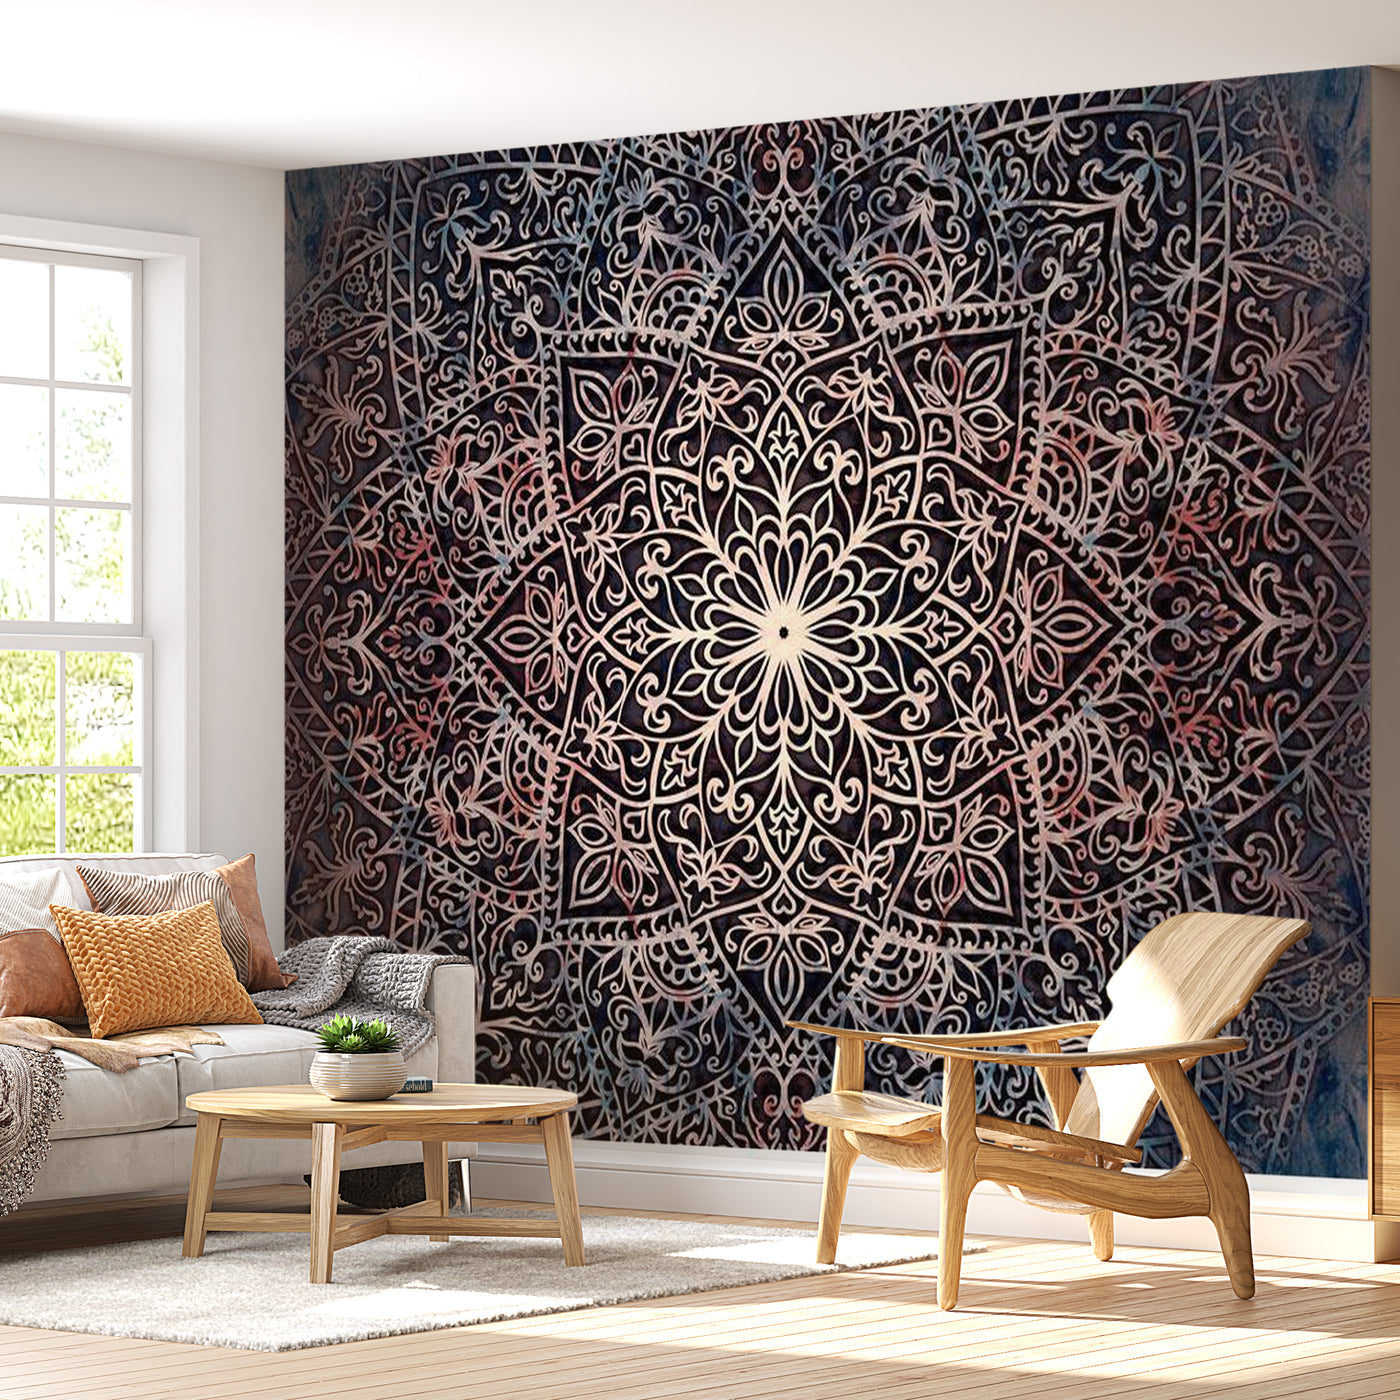 Peel & Stick Mandala Wall Mural - Exotic Mandala - Removable Wall Decals